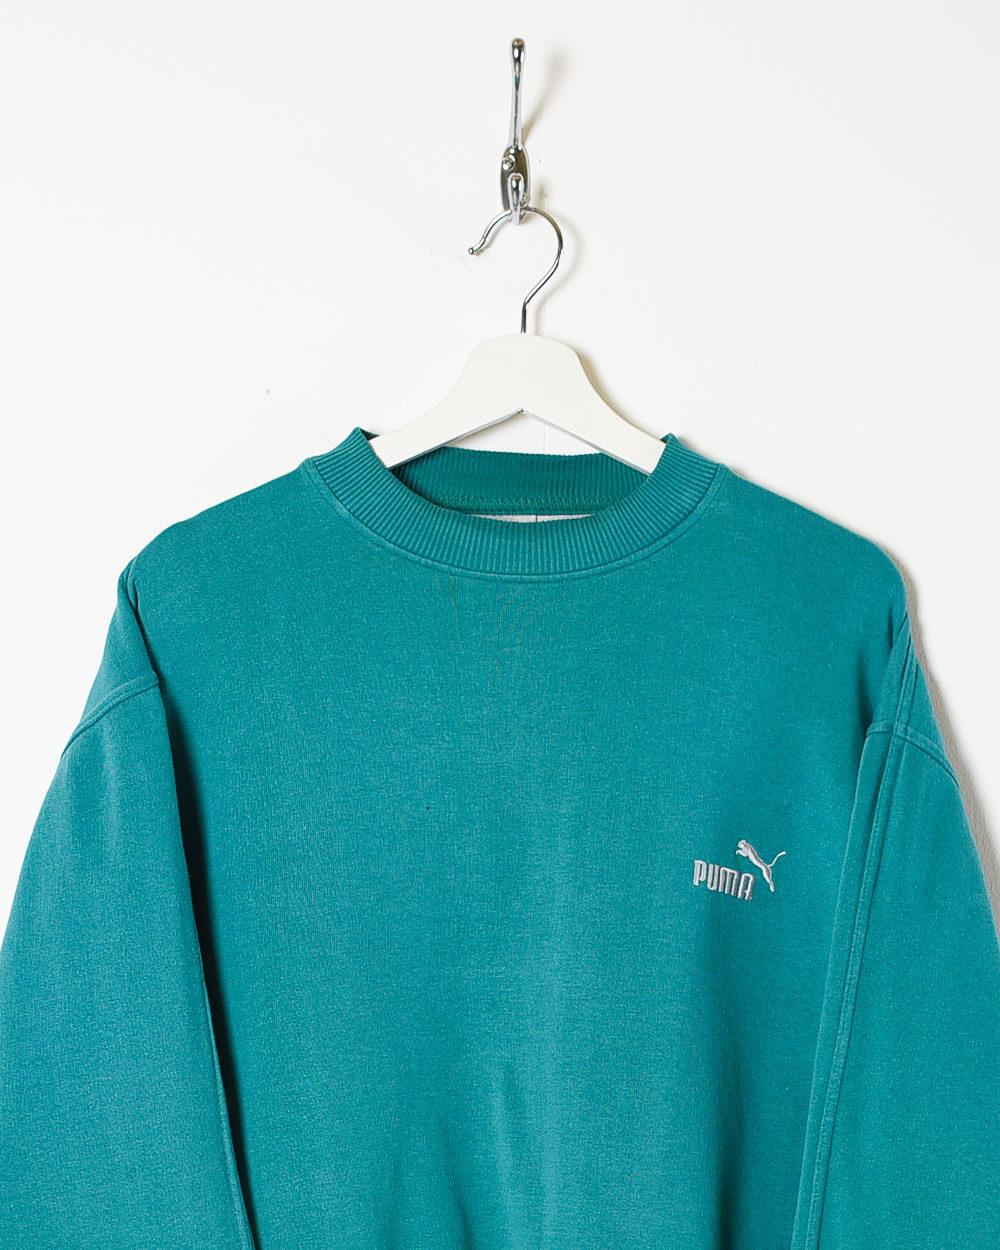 Green Puma Sweatshirt - Medium